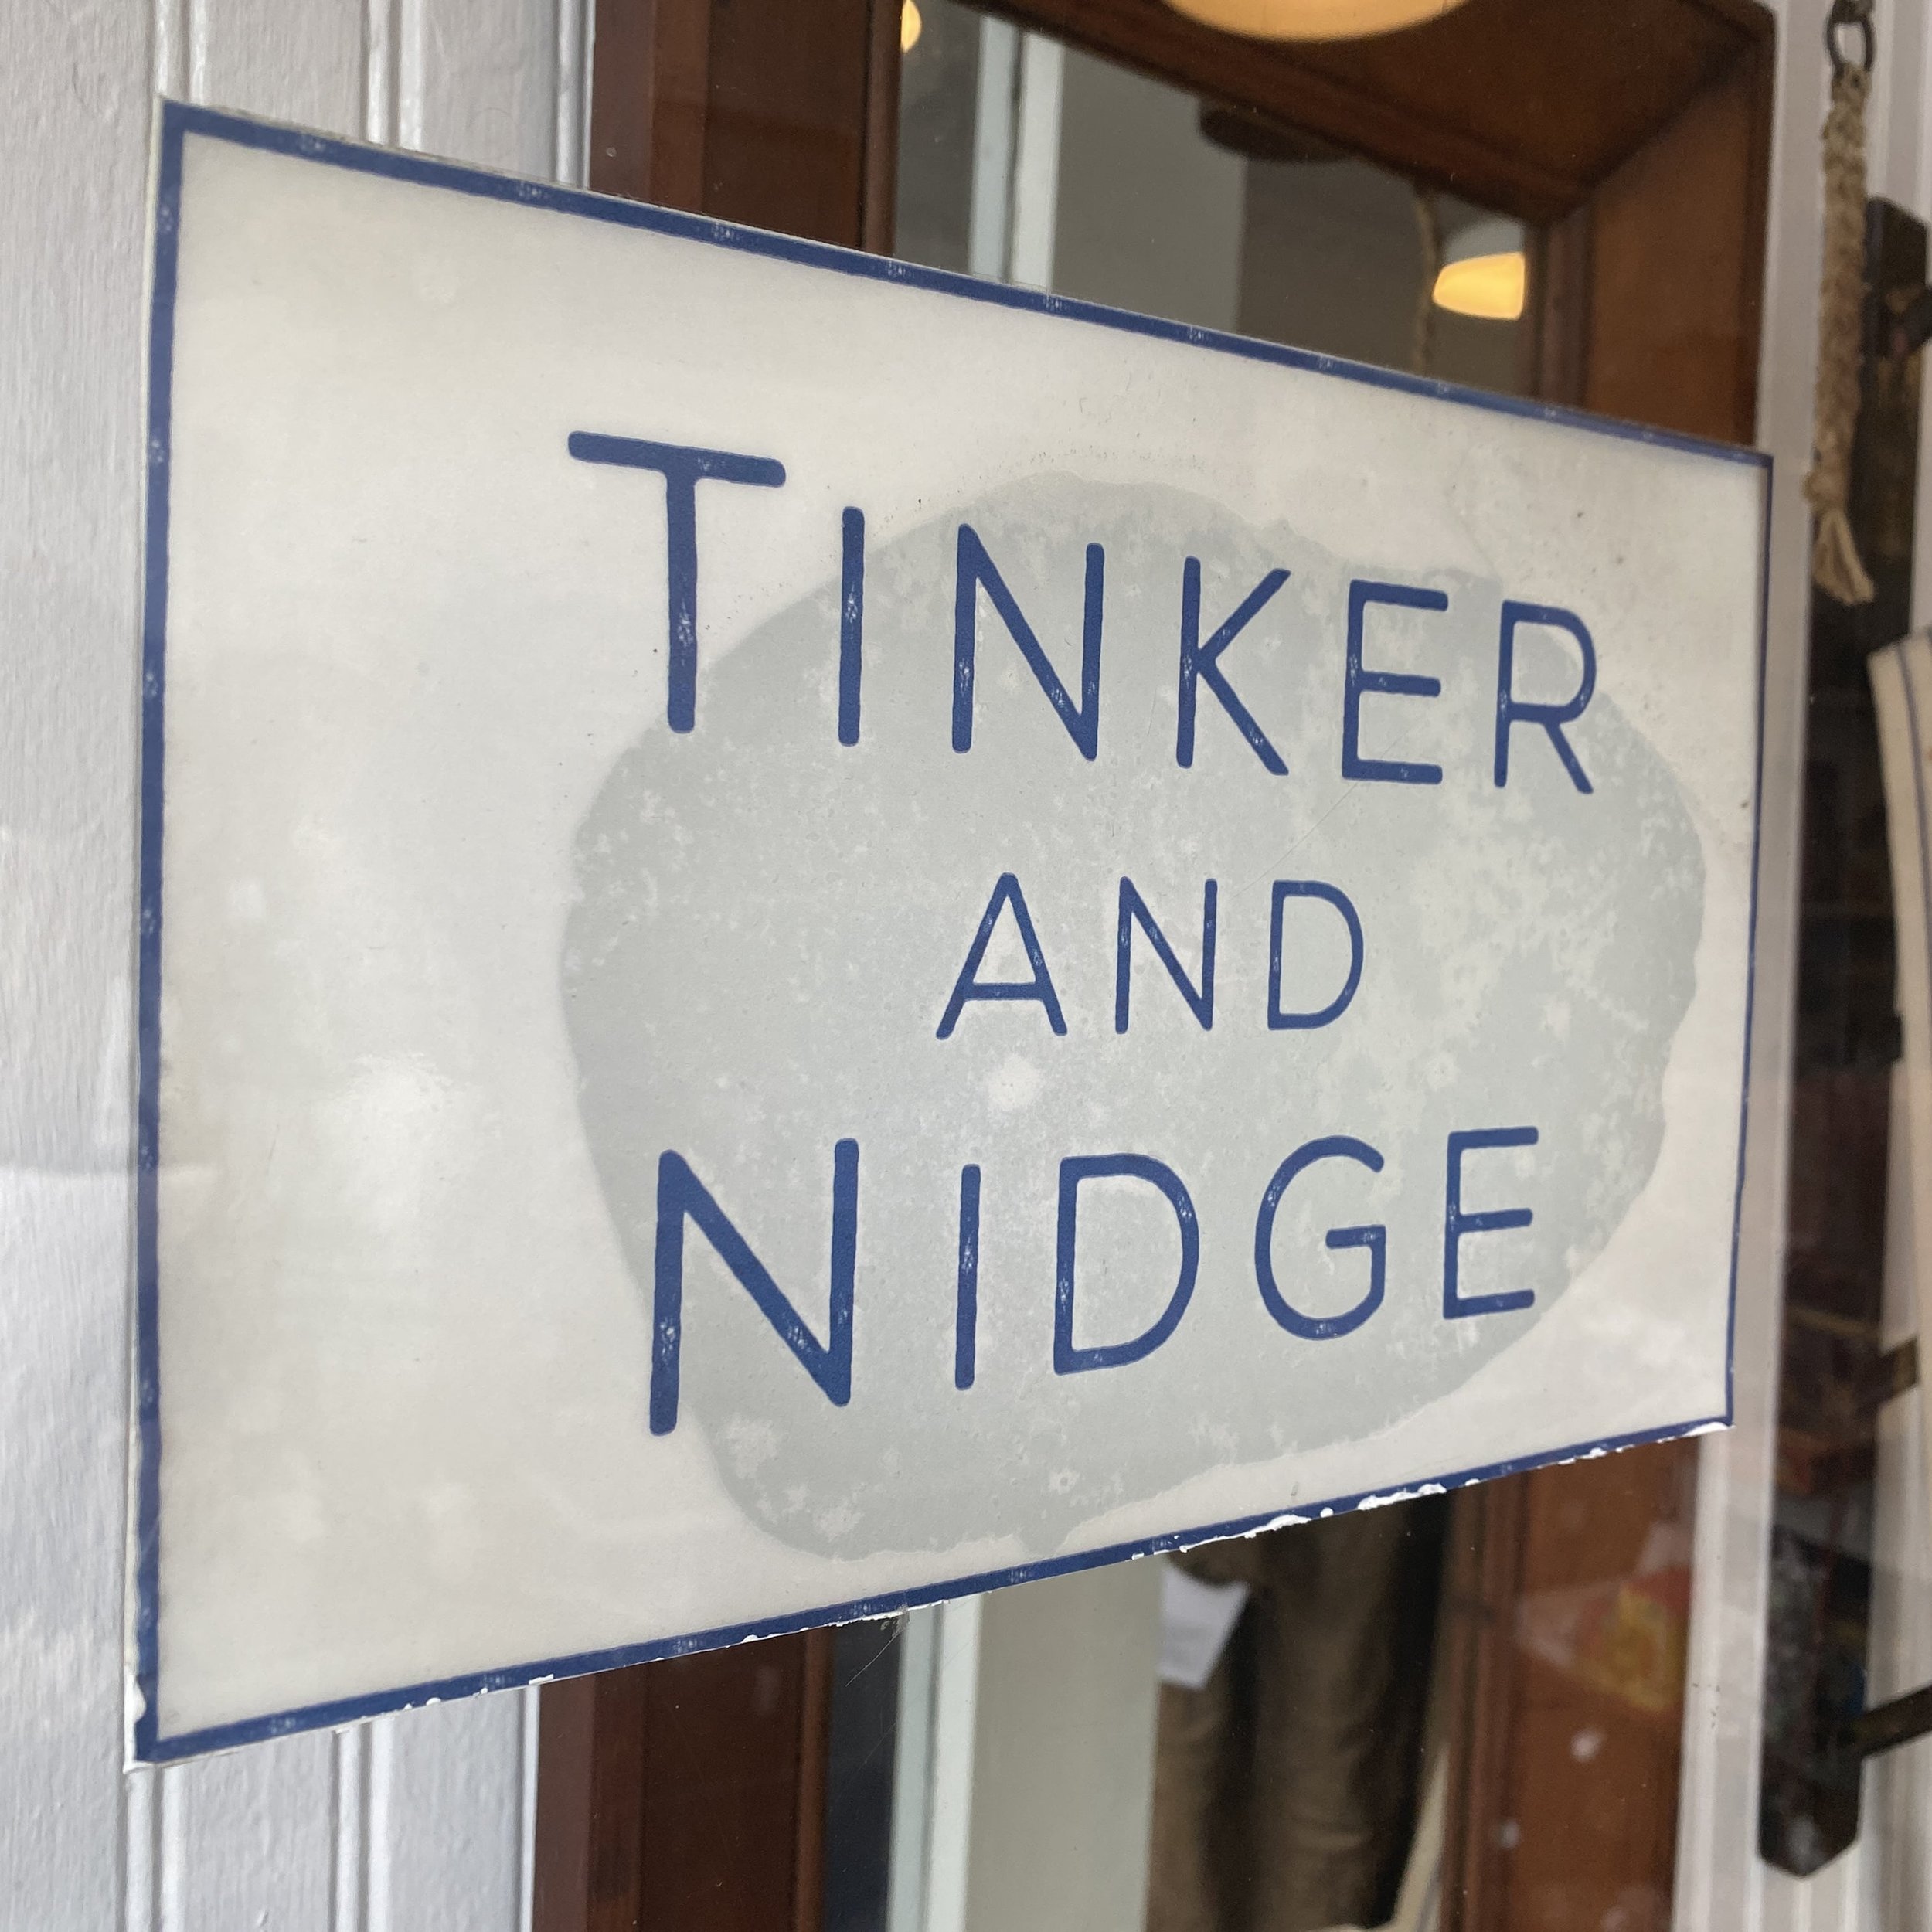 Tinker Nidge Narrowsburg 7.jpg